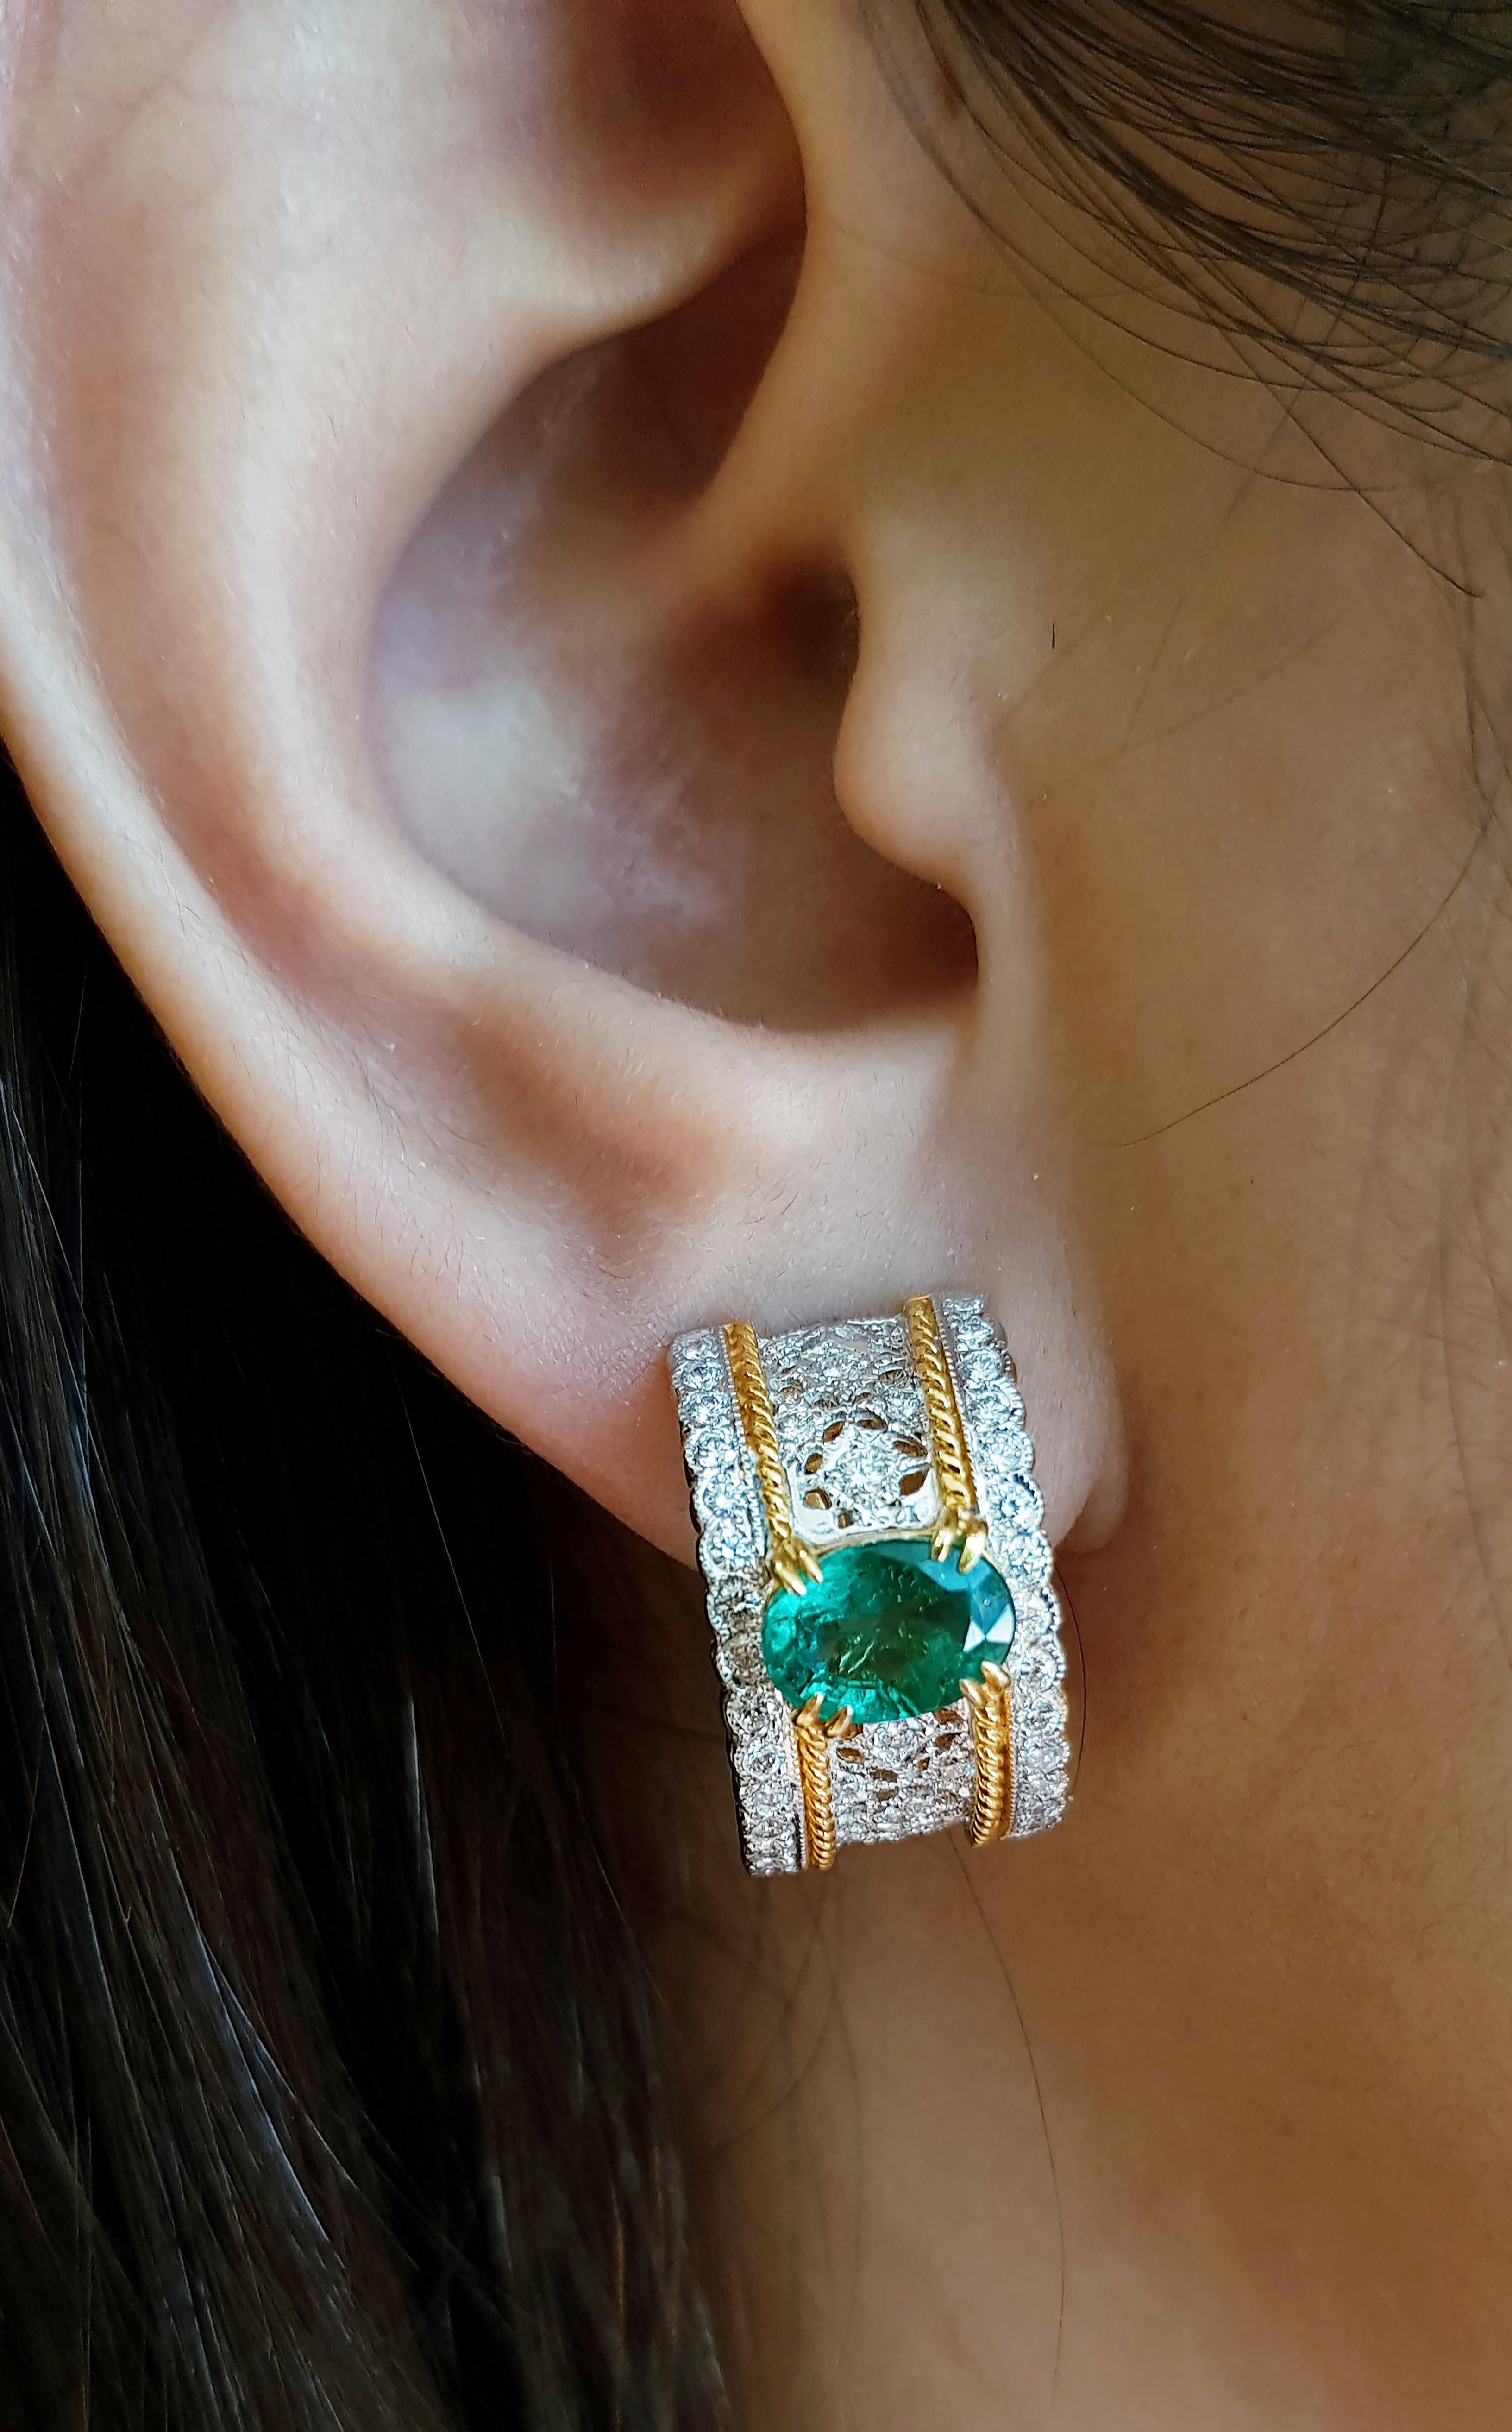 Emerald 2.29 carats with Diamond 0.97 carat Earrings set in 18 Karat Gold Settings

Width:  1.1 cm 
Length: 1.9 cm
Total Weight: 10.69 grams

